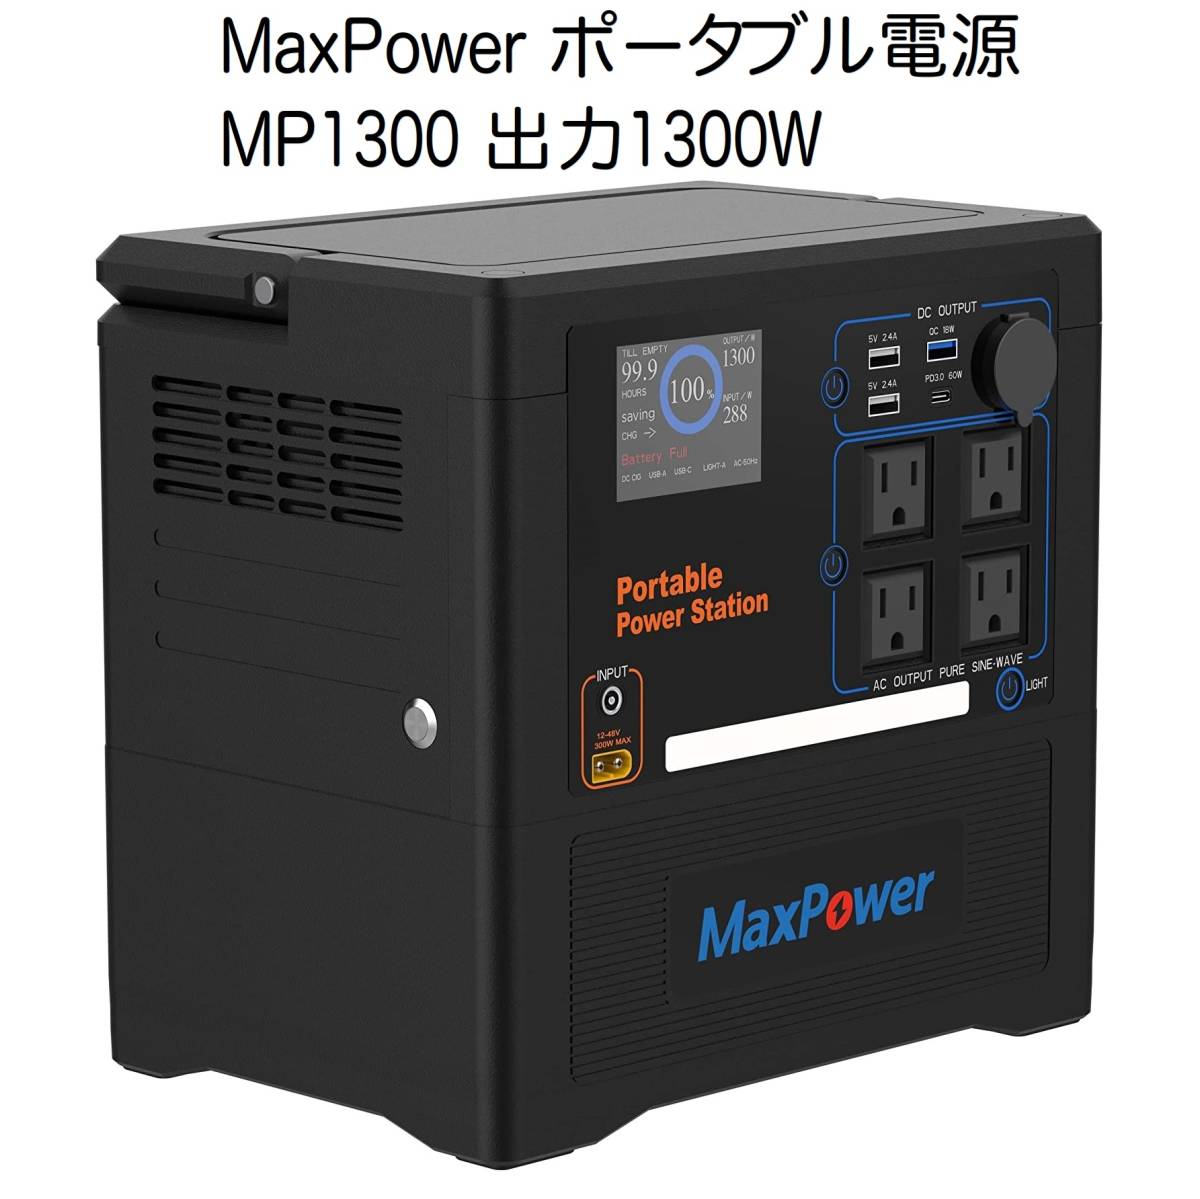 MaxPower ポータブル電源 MP1300 出力1300W 軽量 コンパクト-